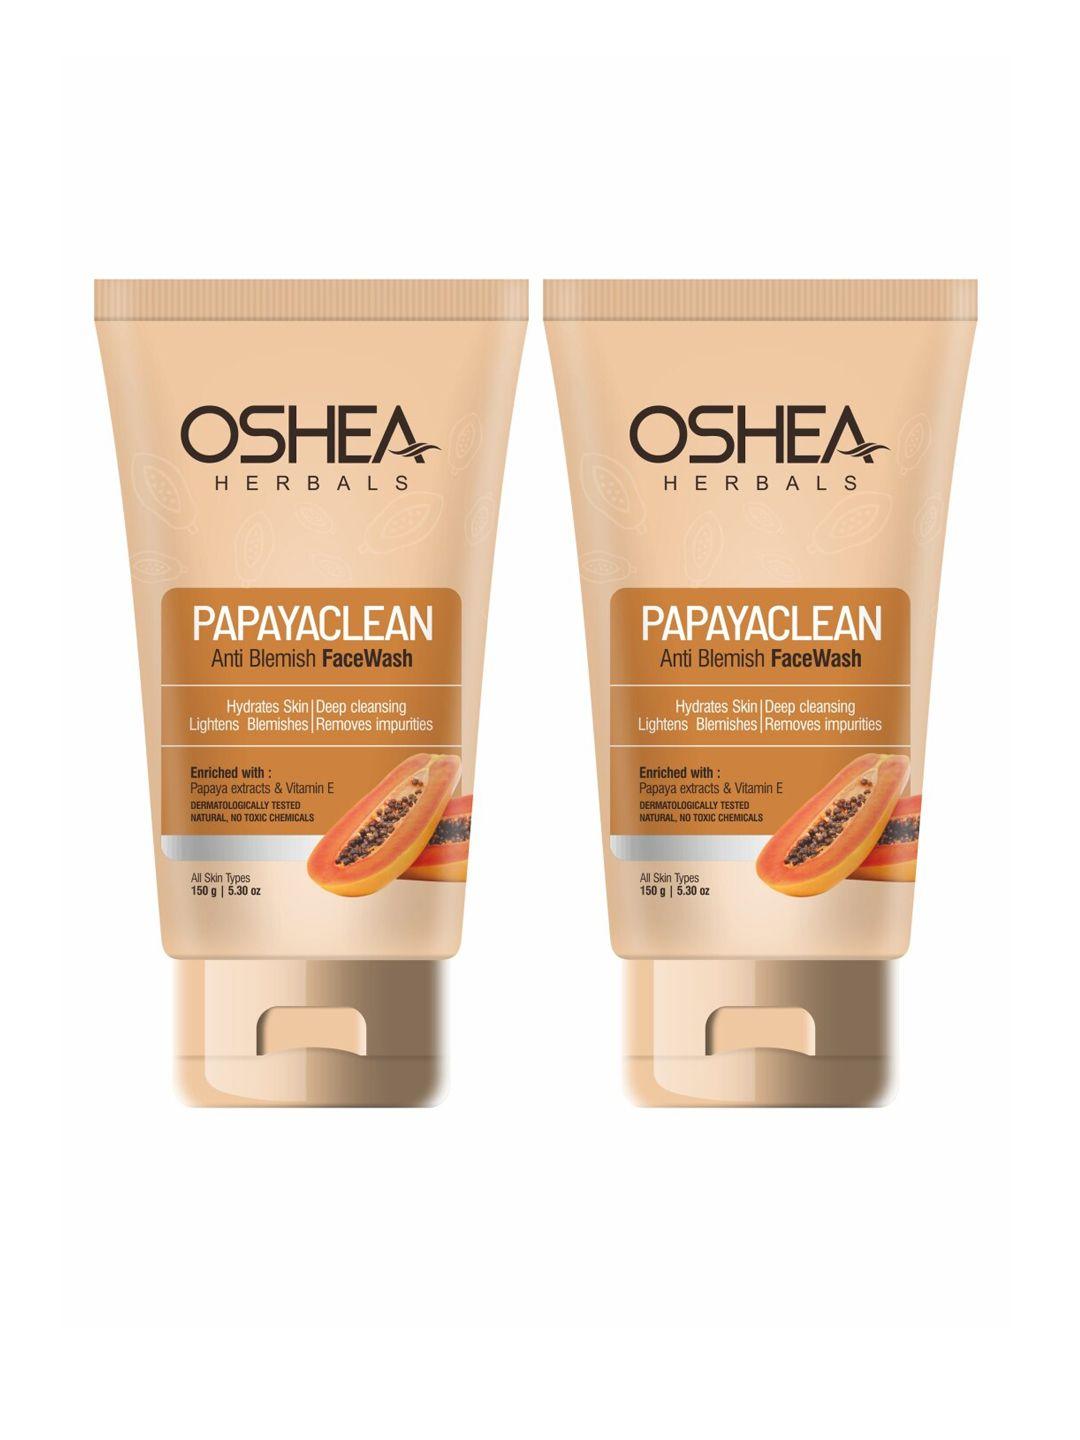 oshea herbals pack of 2 papayaclean anti-blemish face wash 300g